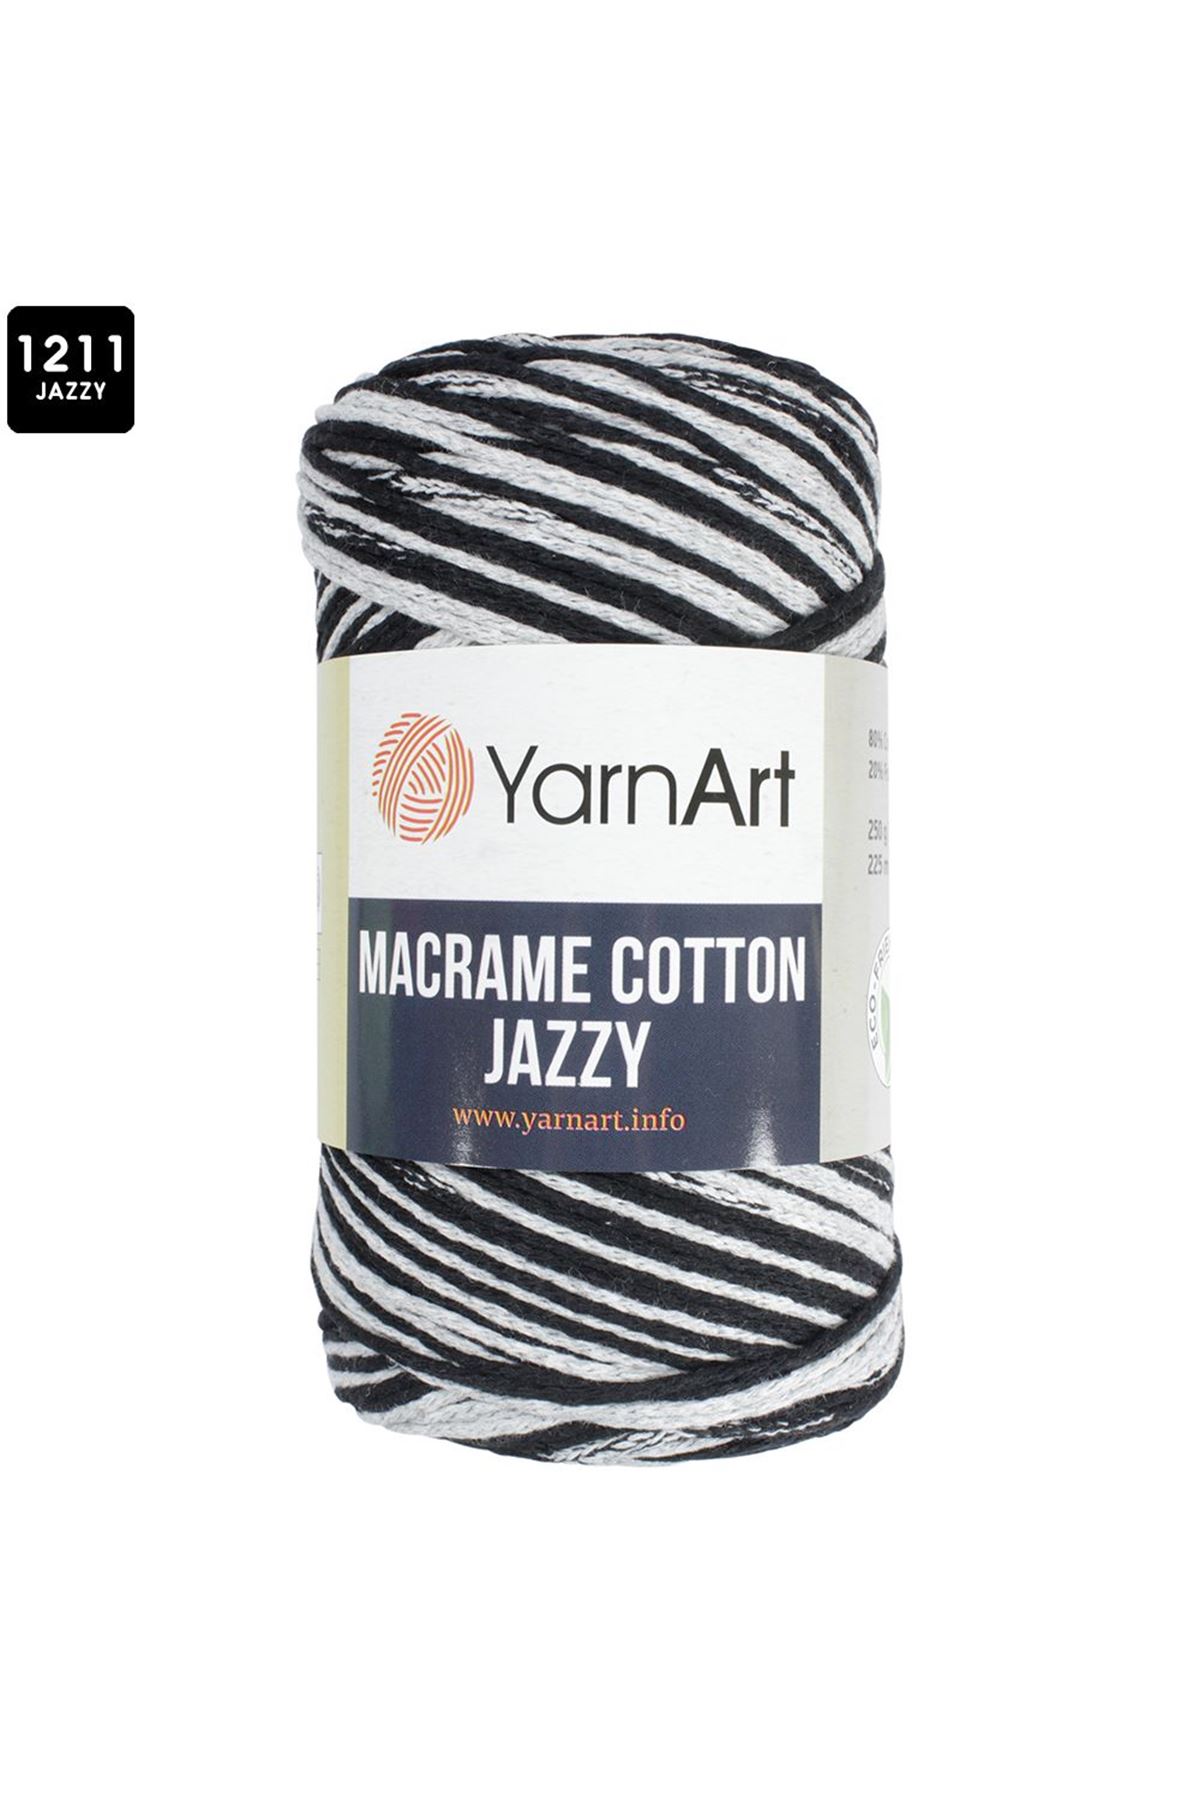 Yarnart Macrame Cotton Jazzy Renk No:1211